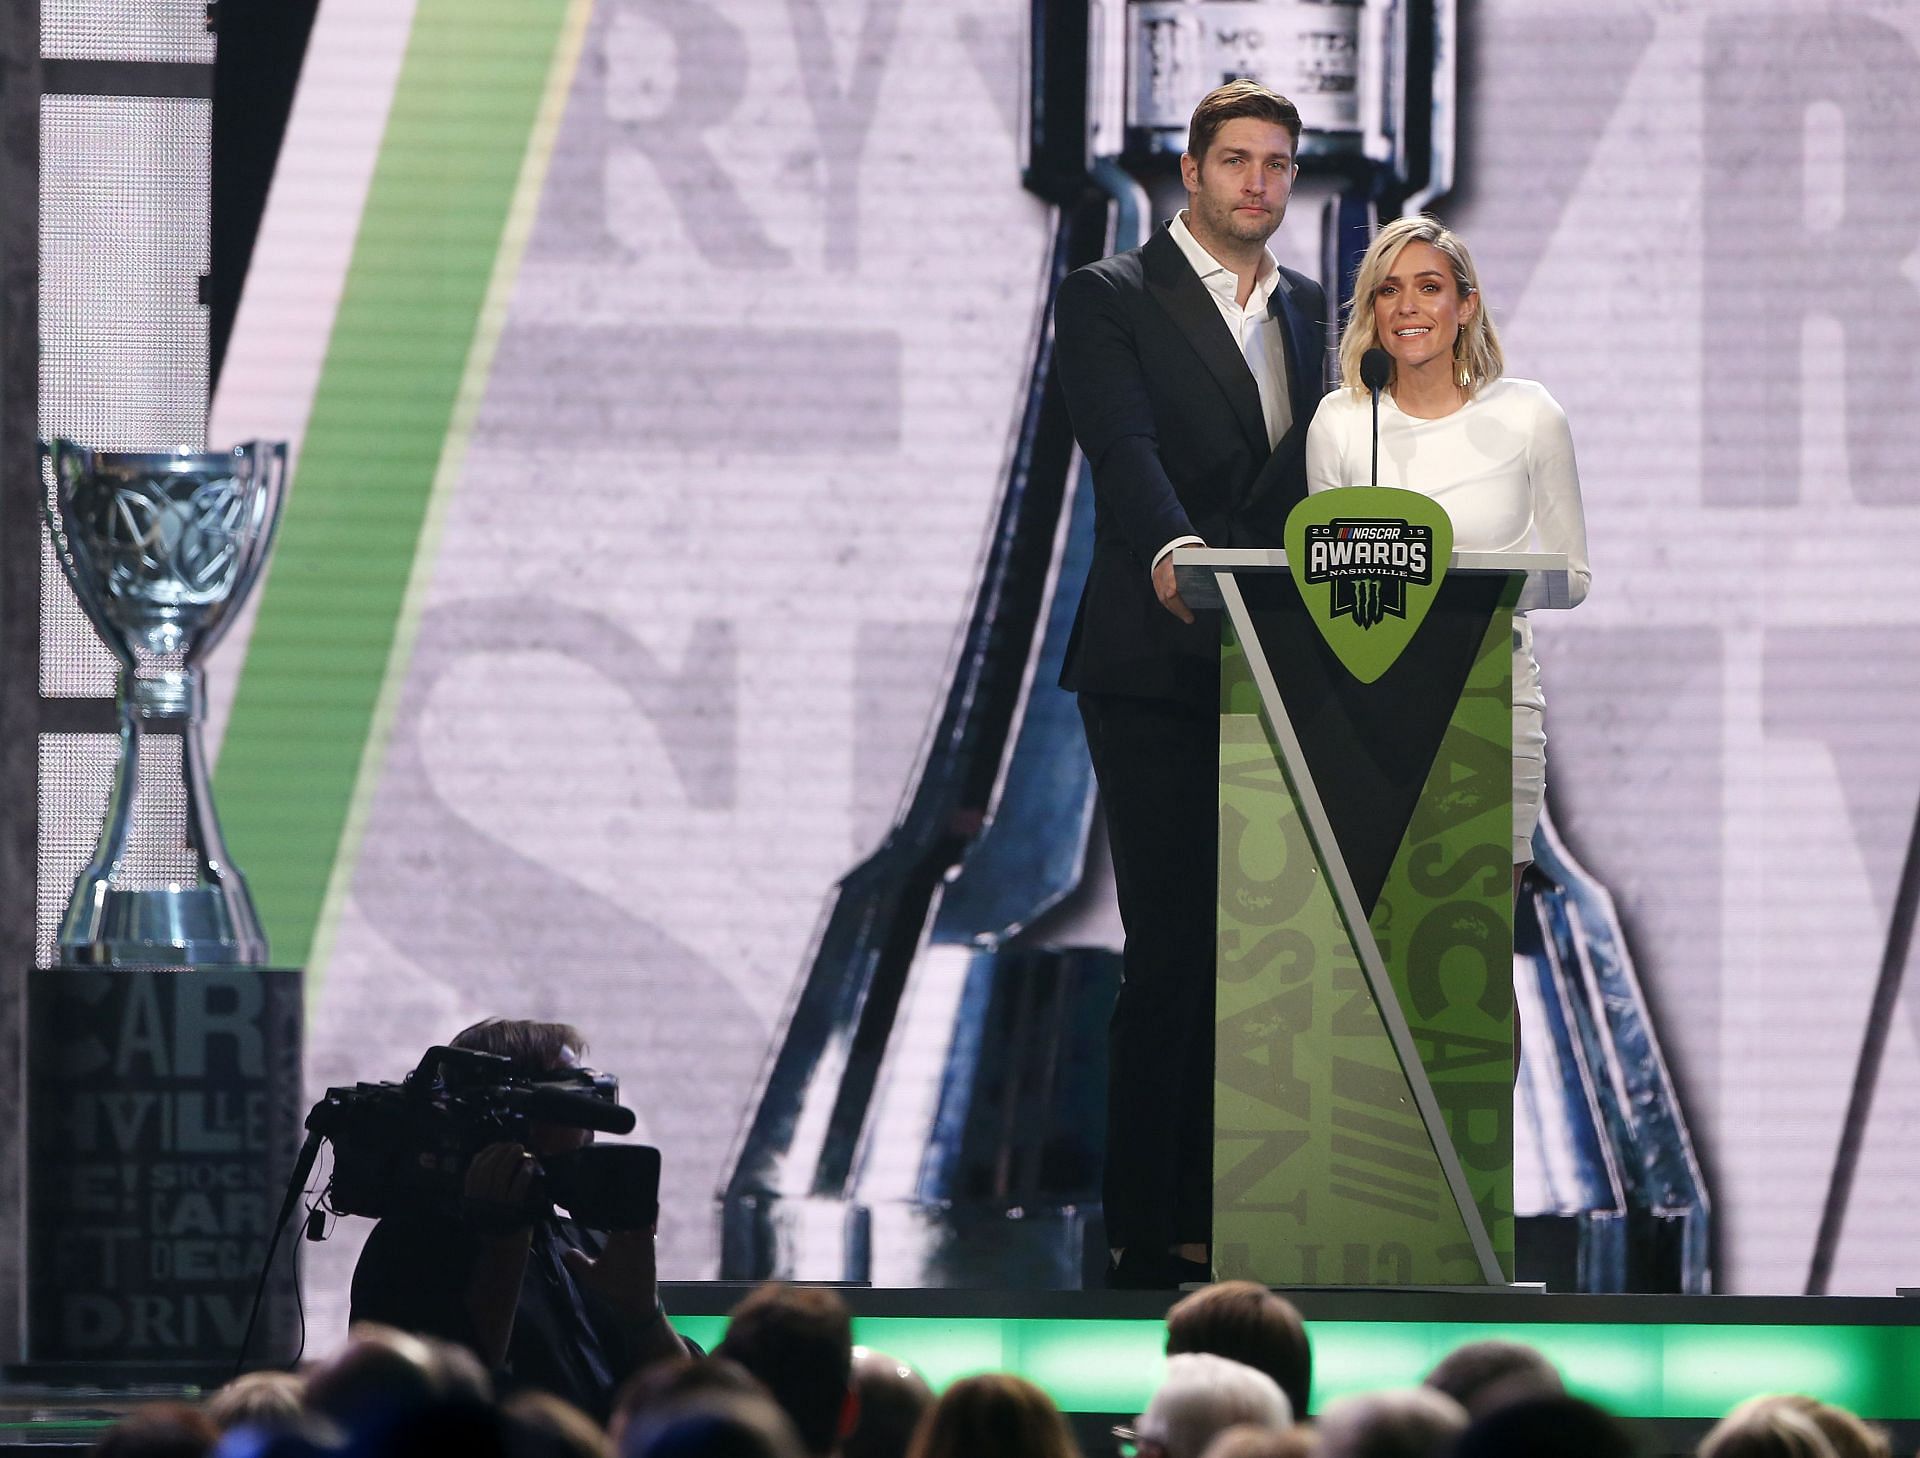 Jay Cutler and Kristin Cavallari at the Monster Energy NASCAR Cup Series Awards